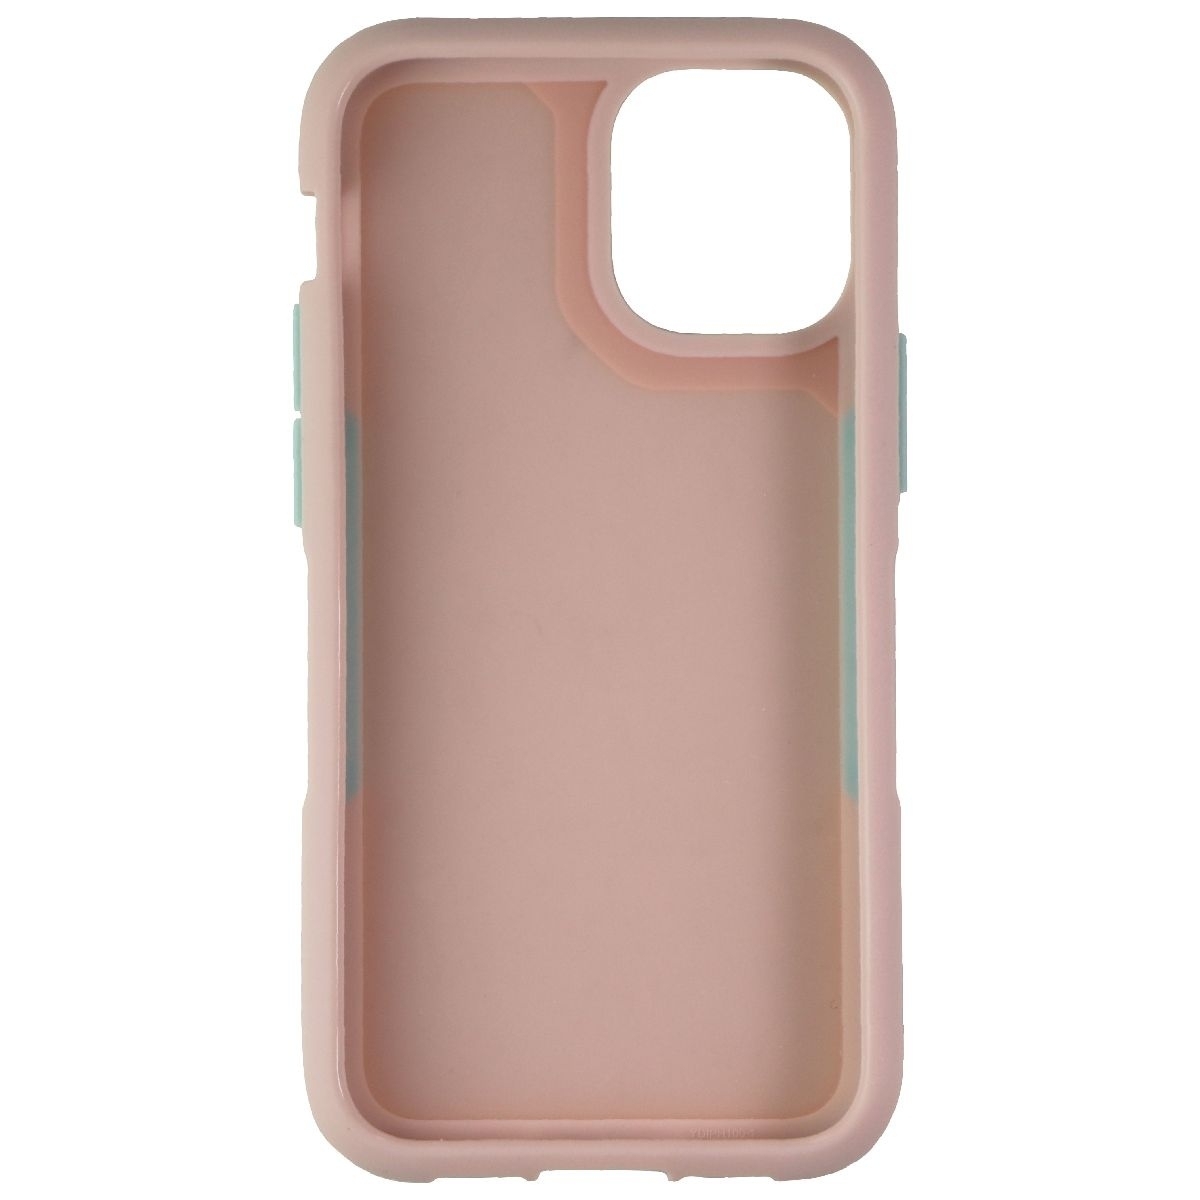 Griffin Survivor Endurance Case For Apple IPhone 12 Mini - Pink/Sky Blue